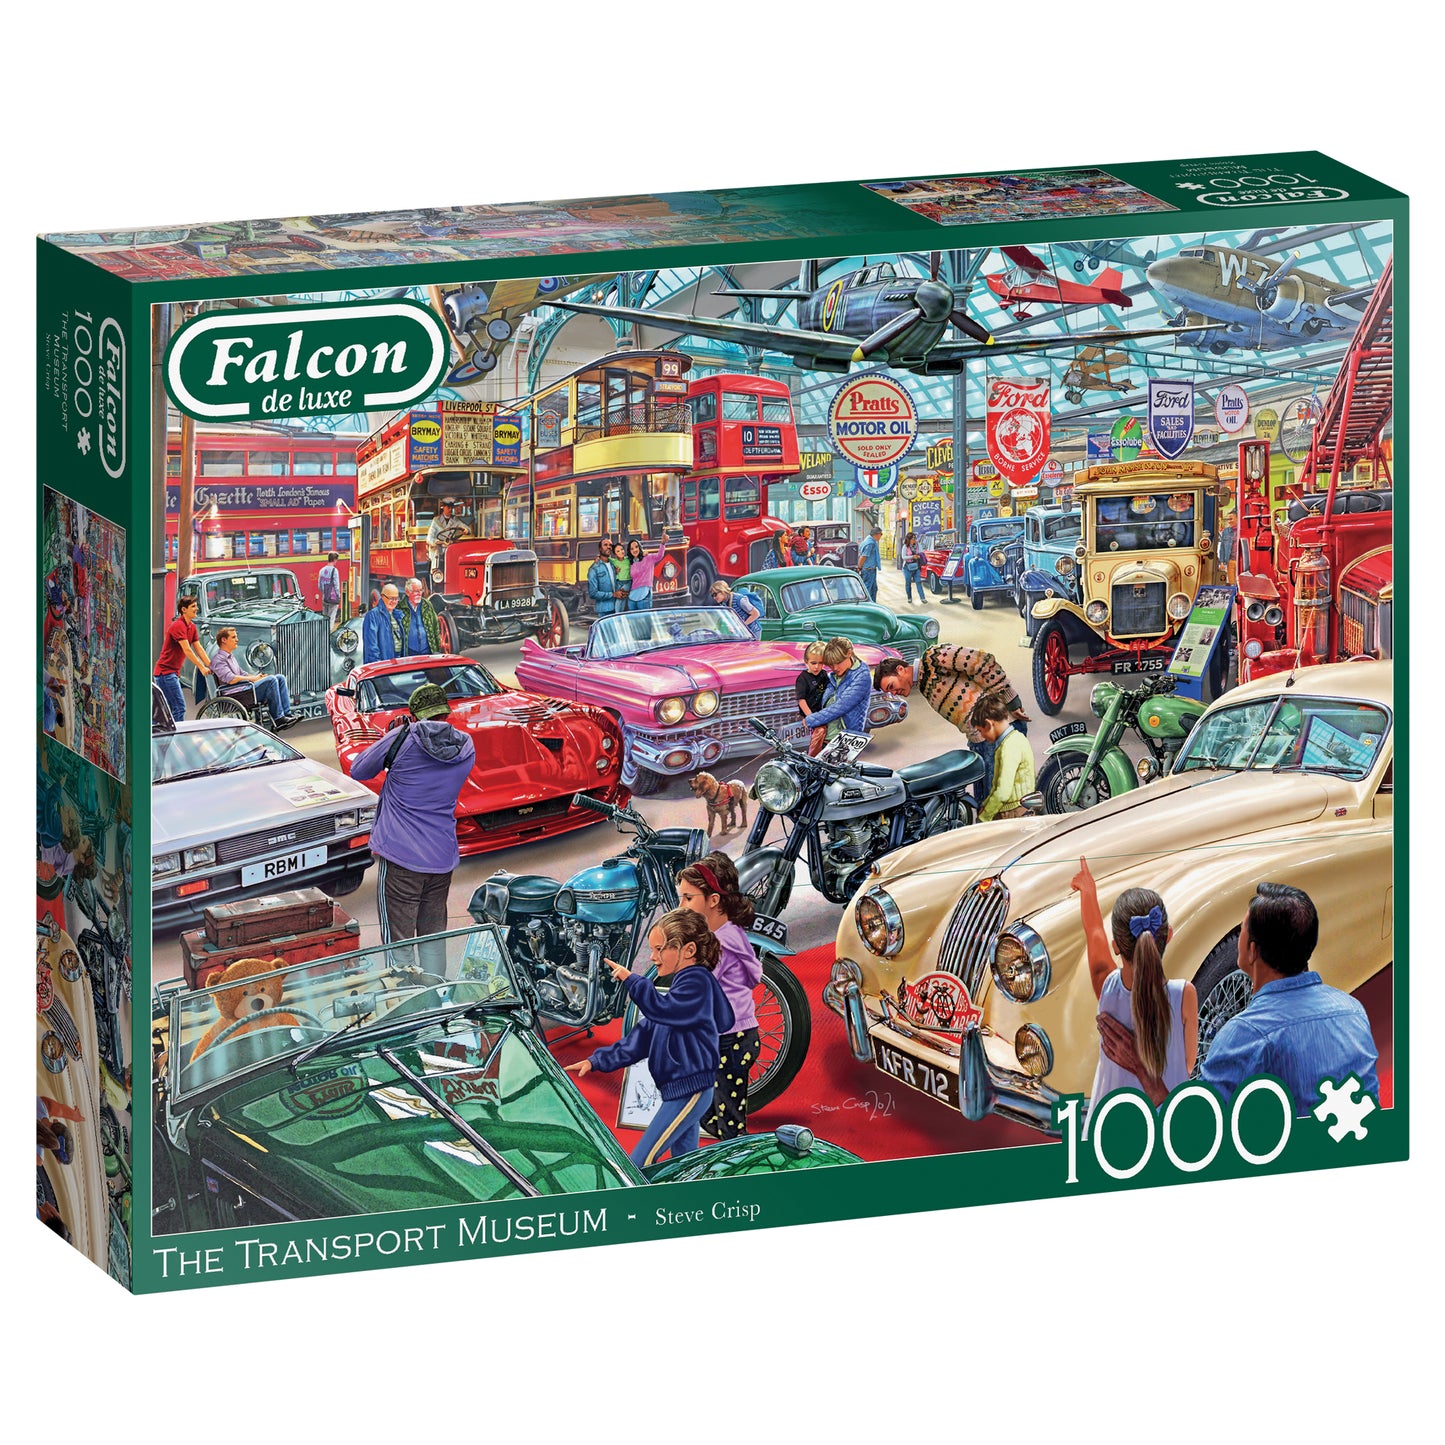 Falcon De Luxe - The Transport Museum - 1000 Piece Jigsaw Puzzle